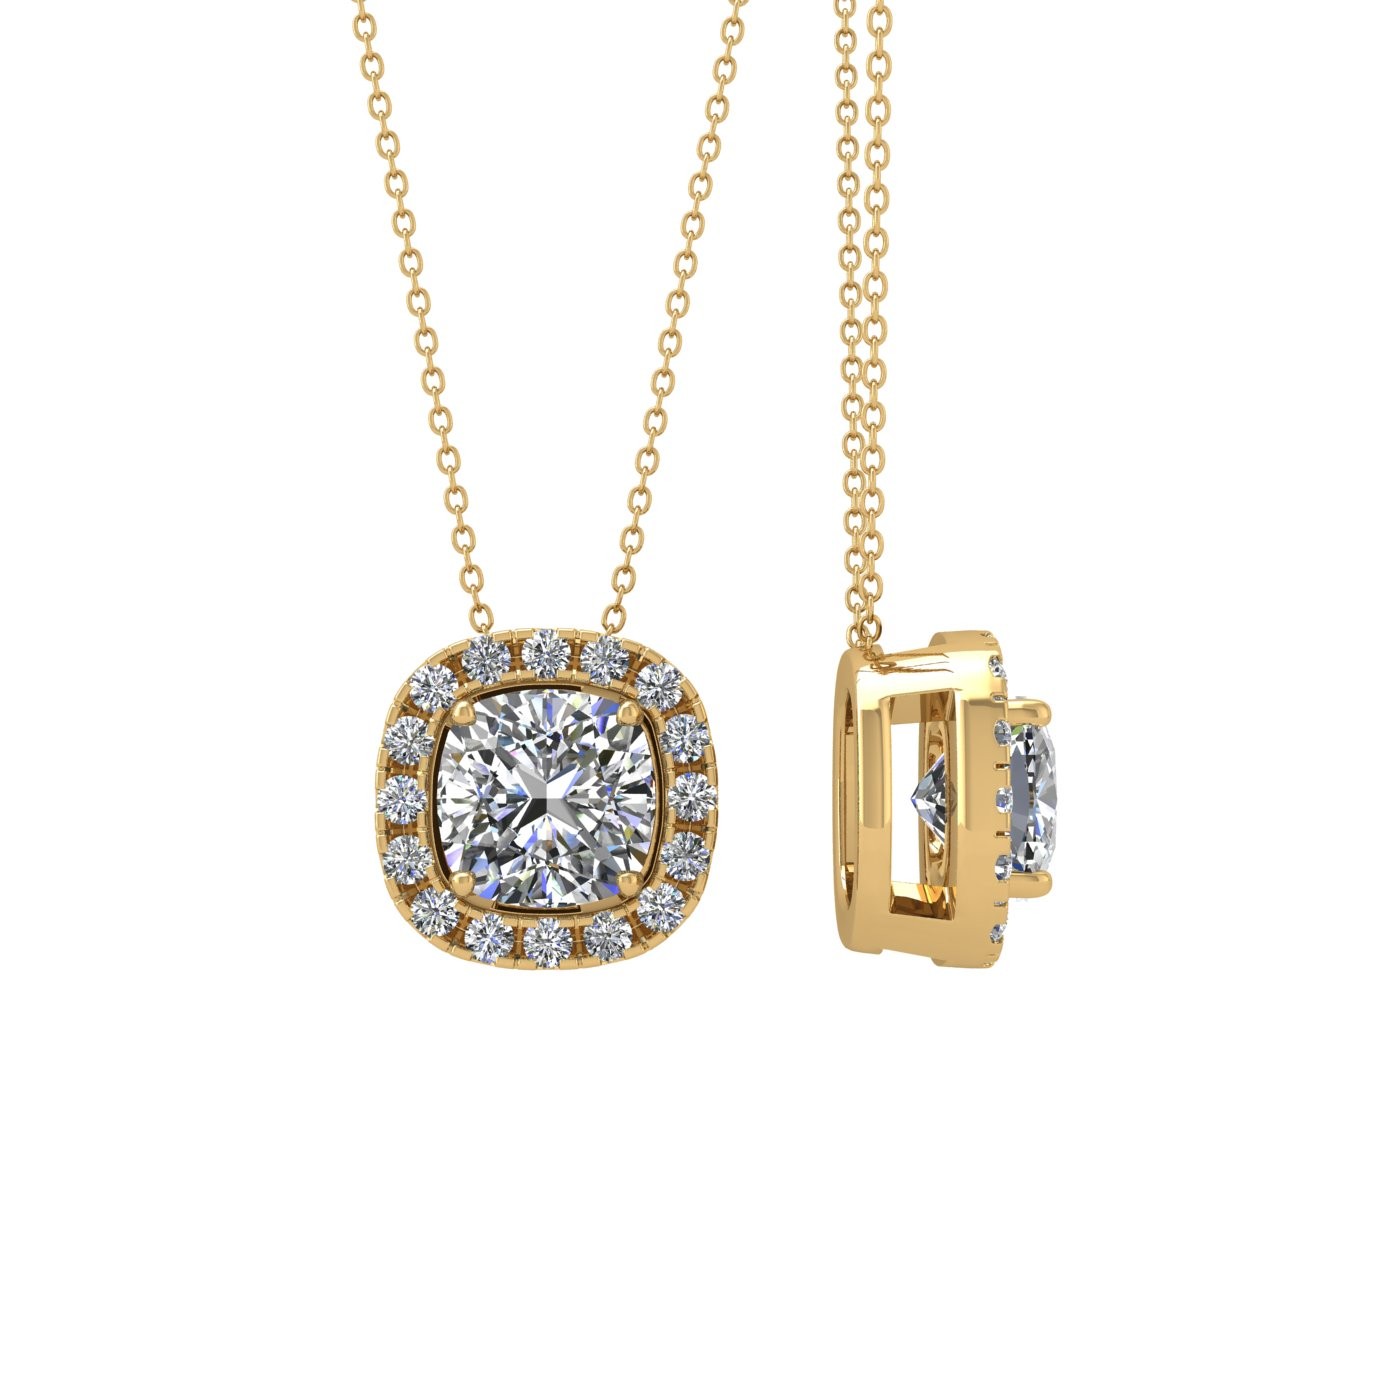 18k white gold 0,5 ct 4 prongs cushion shape diamond pendant with diamond pavÉ set halo Photos & images